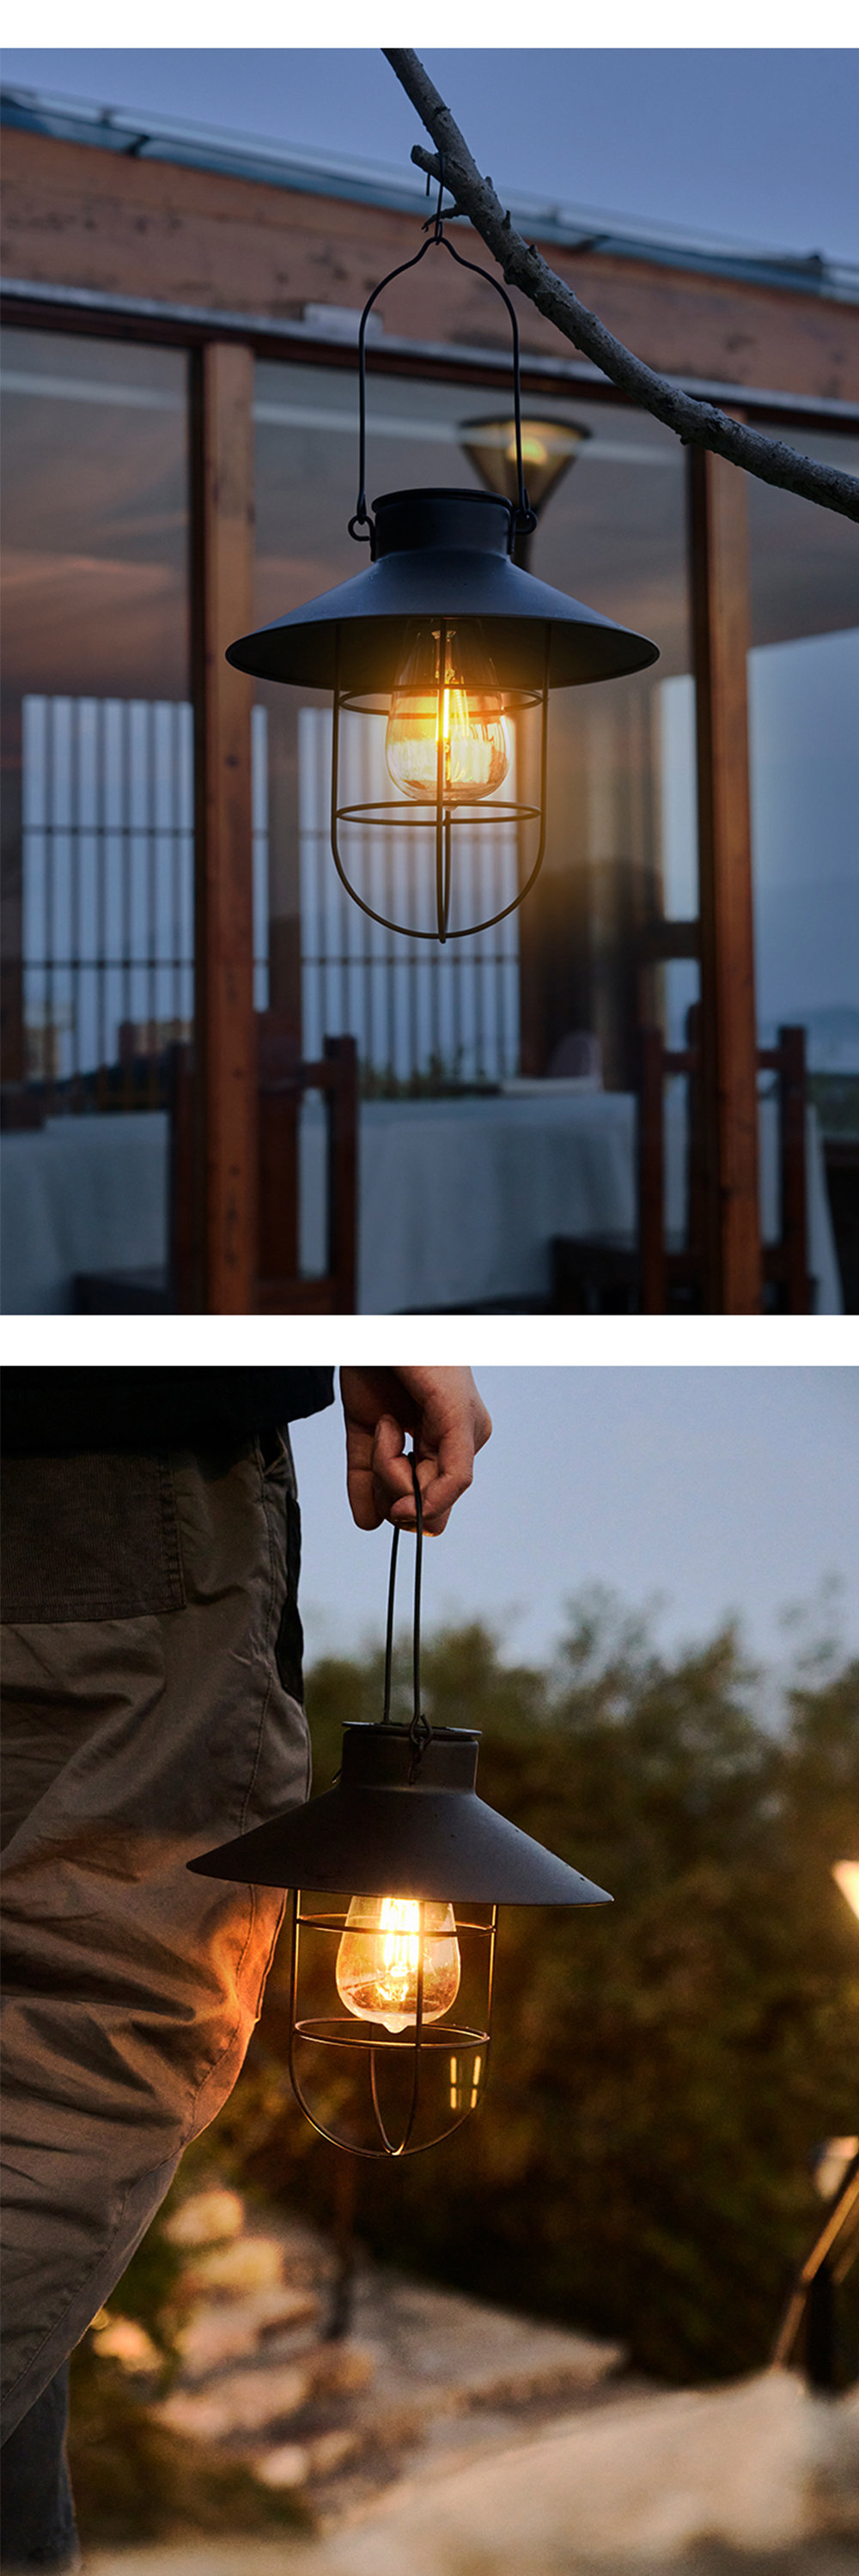 Outdoor Solar Powered Hanging Lantern - Black - Bronze - ApolloBox